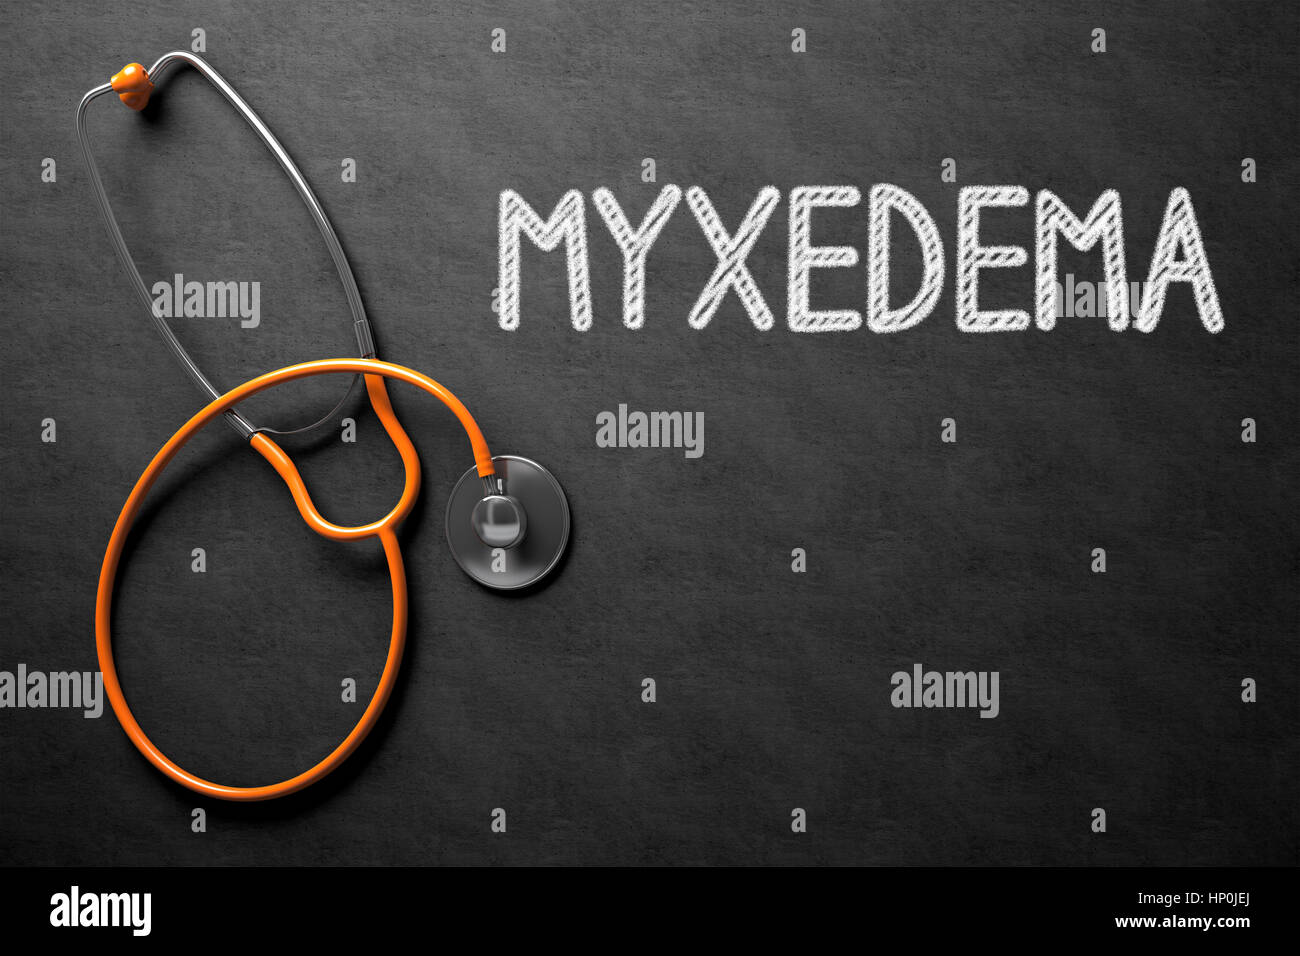 Myxedema - Text on Chalkboard. 3D Illustration. Stock Photo